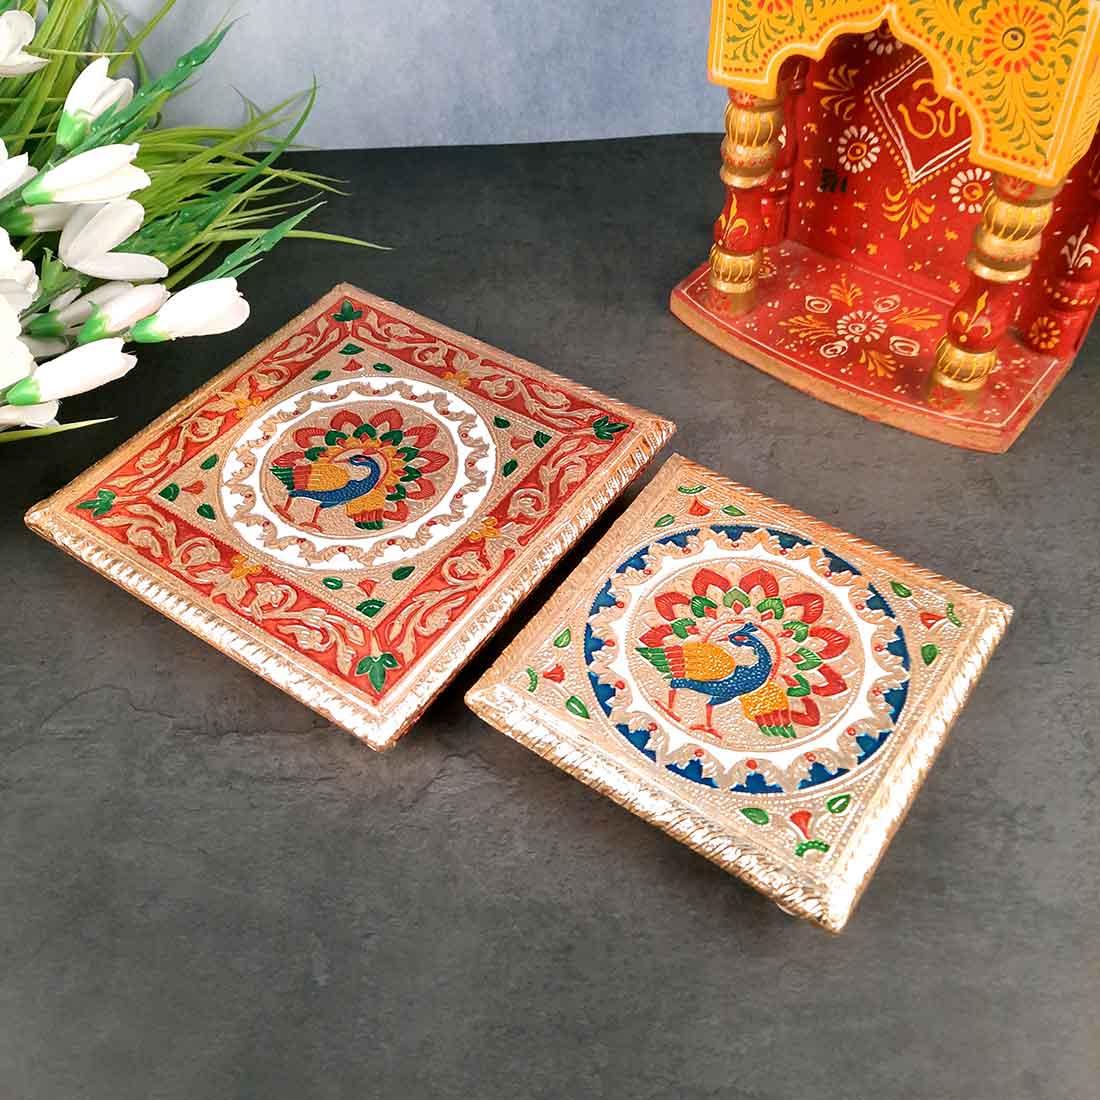 Pooja Chowki Bajot | Wooden Chowki Set - For Pooja, Festivals, Temple & Home Décor - 6, 8 Inch - Apkamart